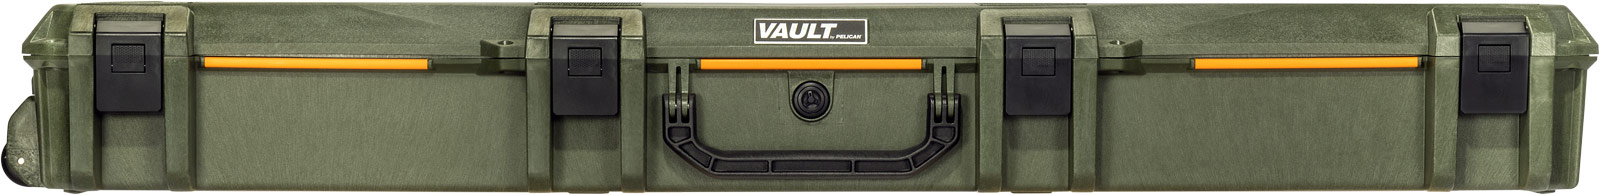 pelican vault v800 od green closed case